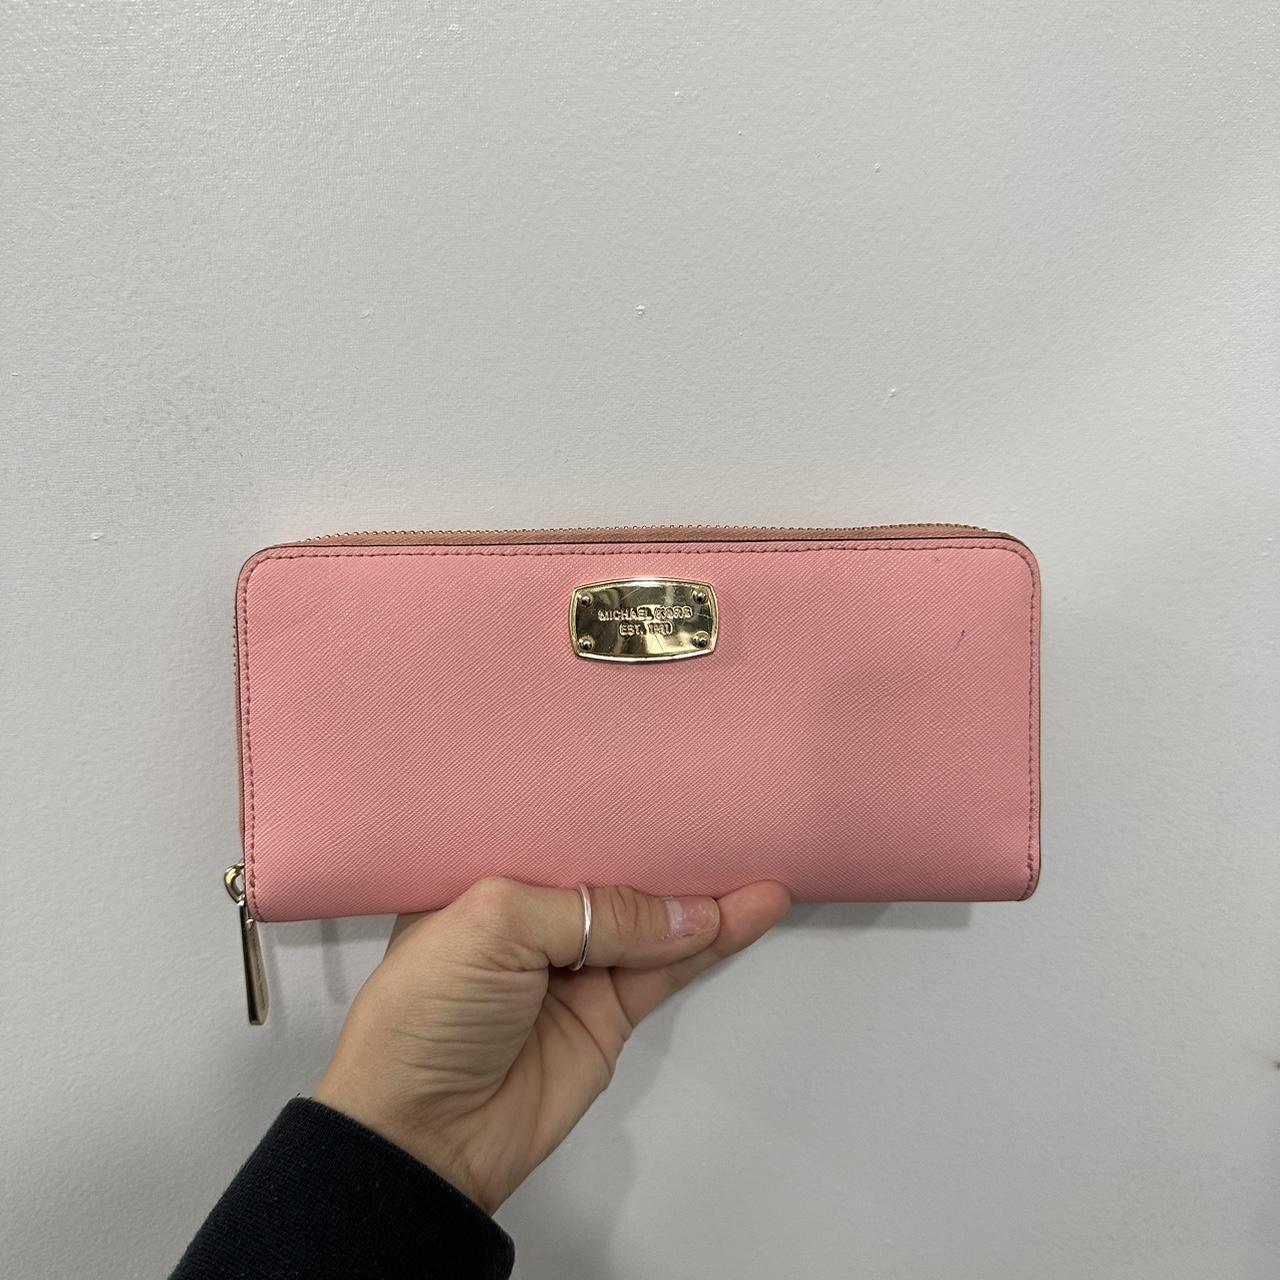 Michael Kors Pink Wallet 💳 🌸 #wallets #pink... - Depop